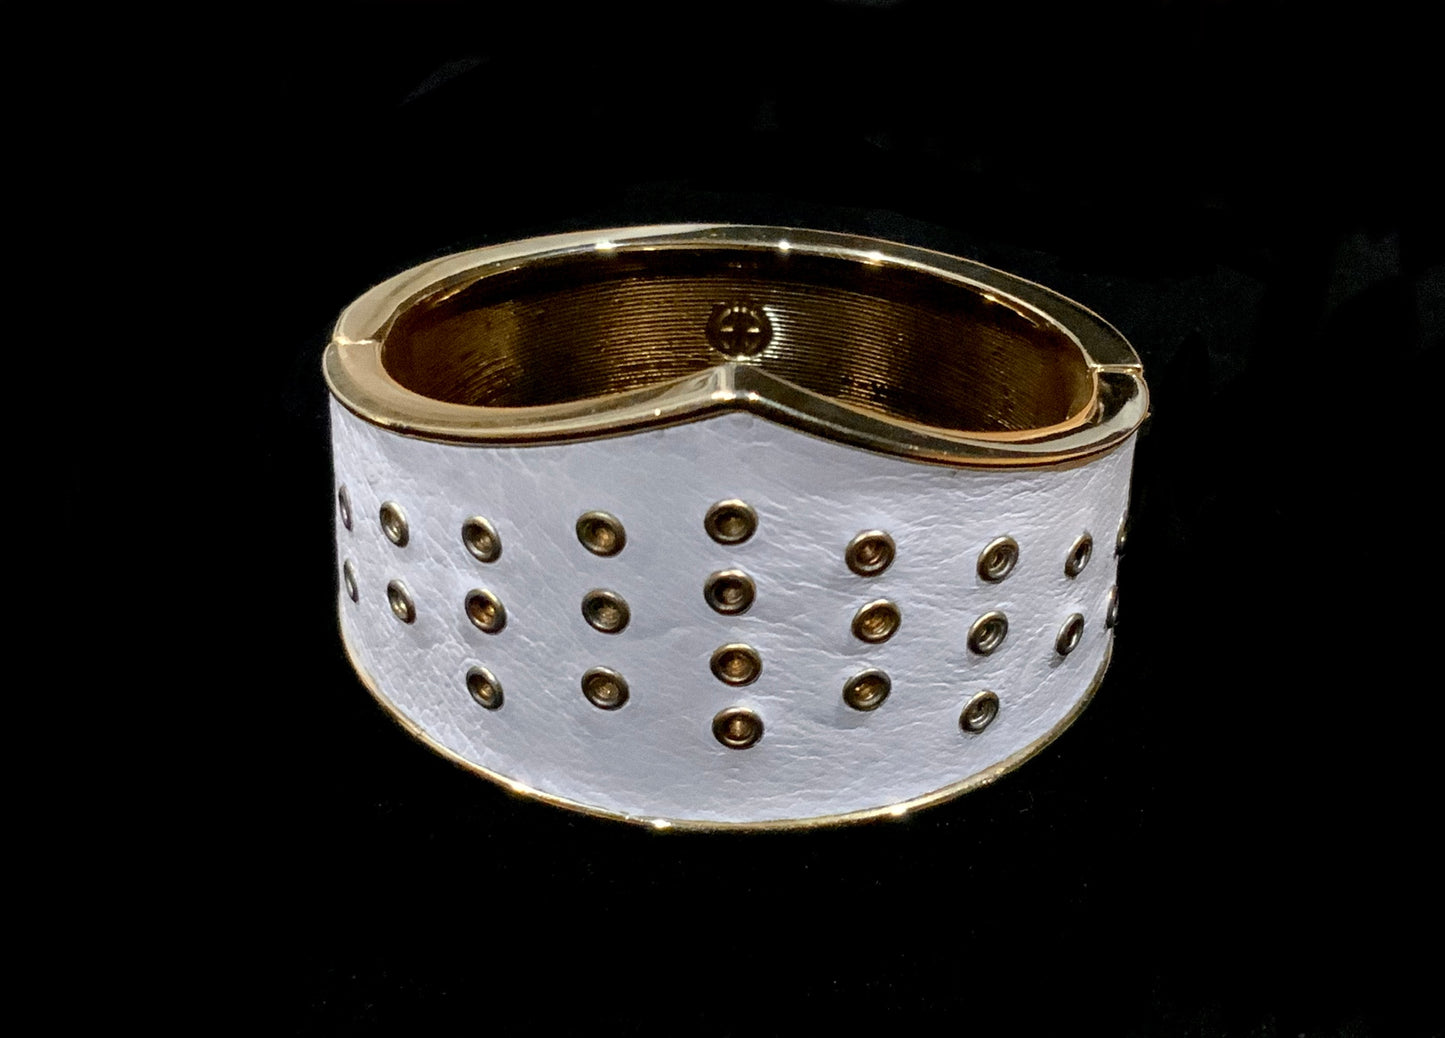 House of Harlow 1960 Gold & White Leather Bangle Bracelet